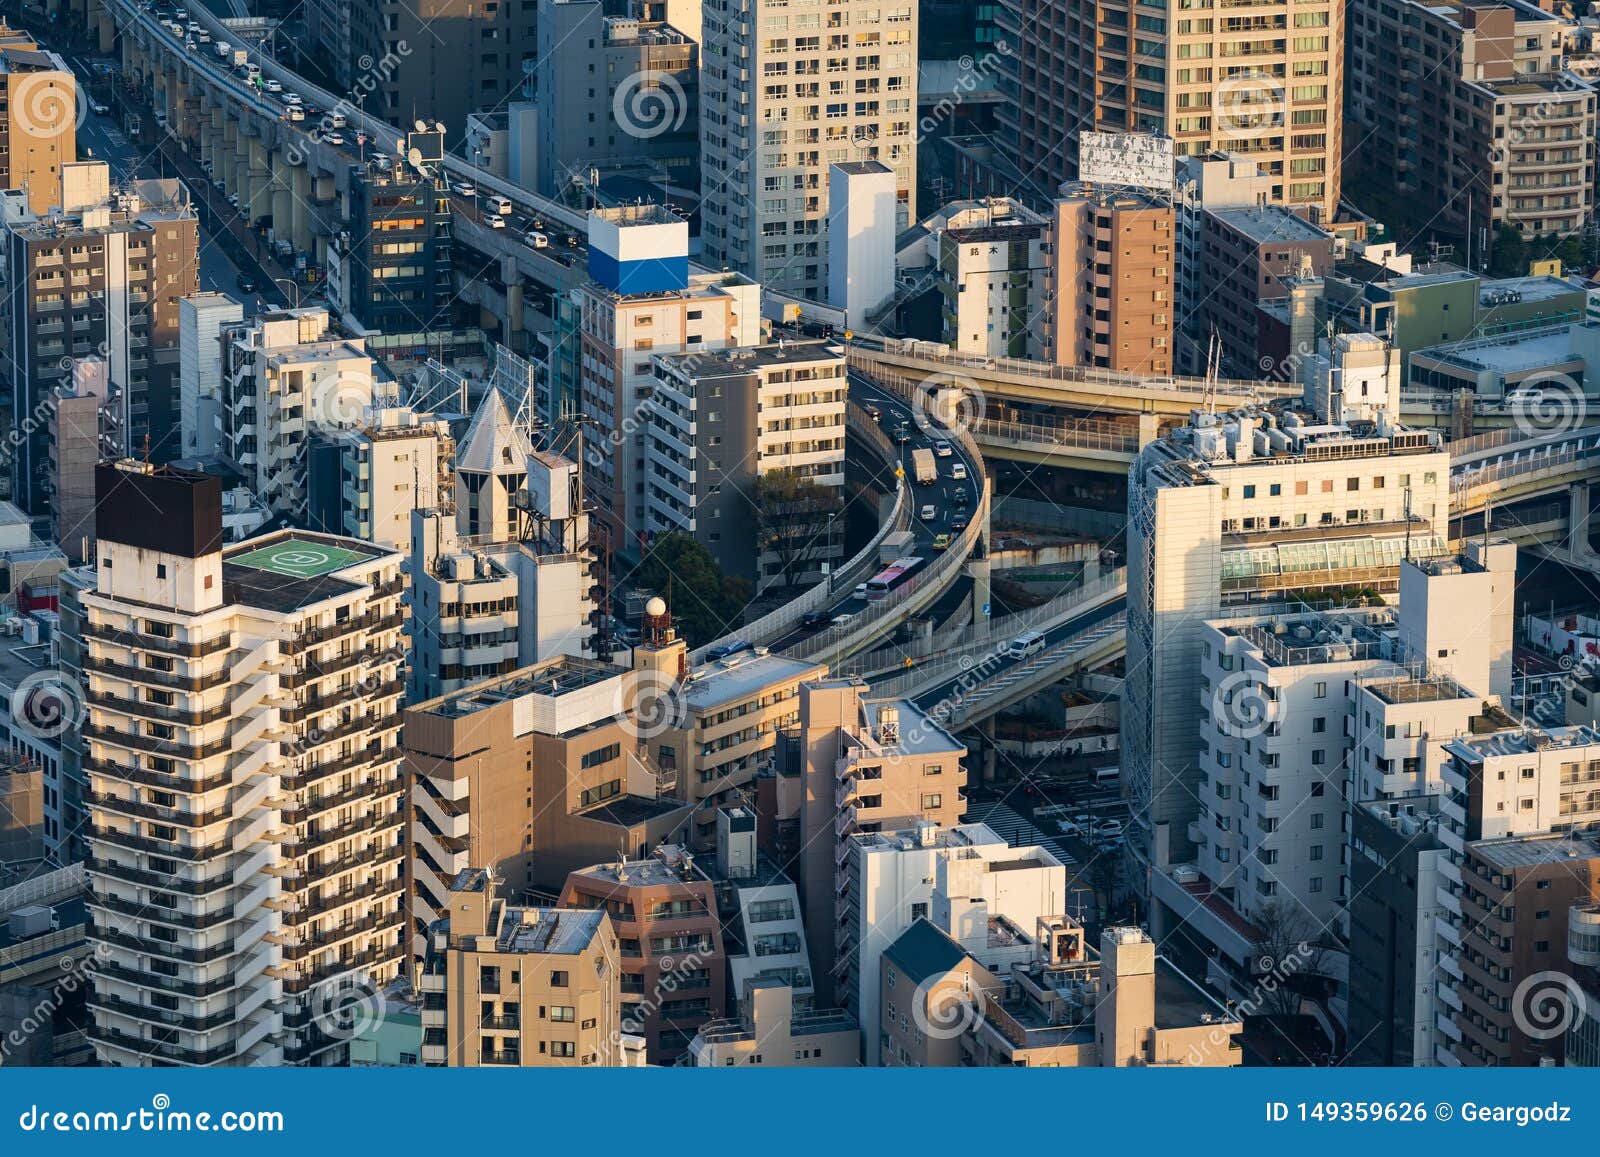 metropolitan expressway junction and city, tokyo, japan